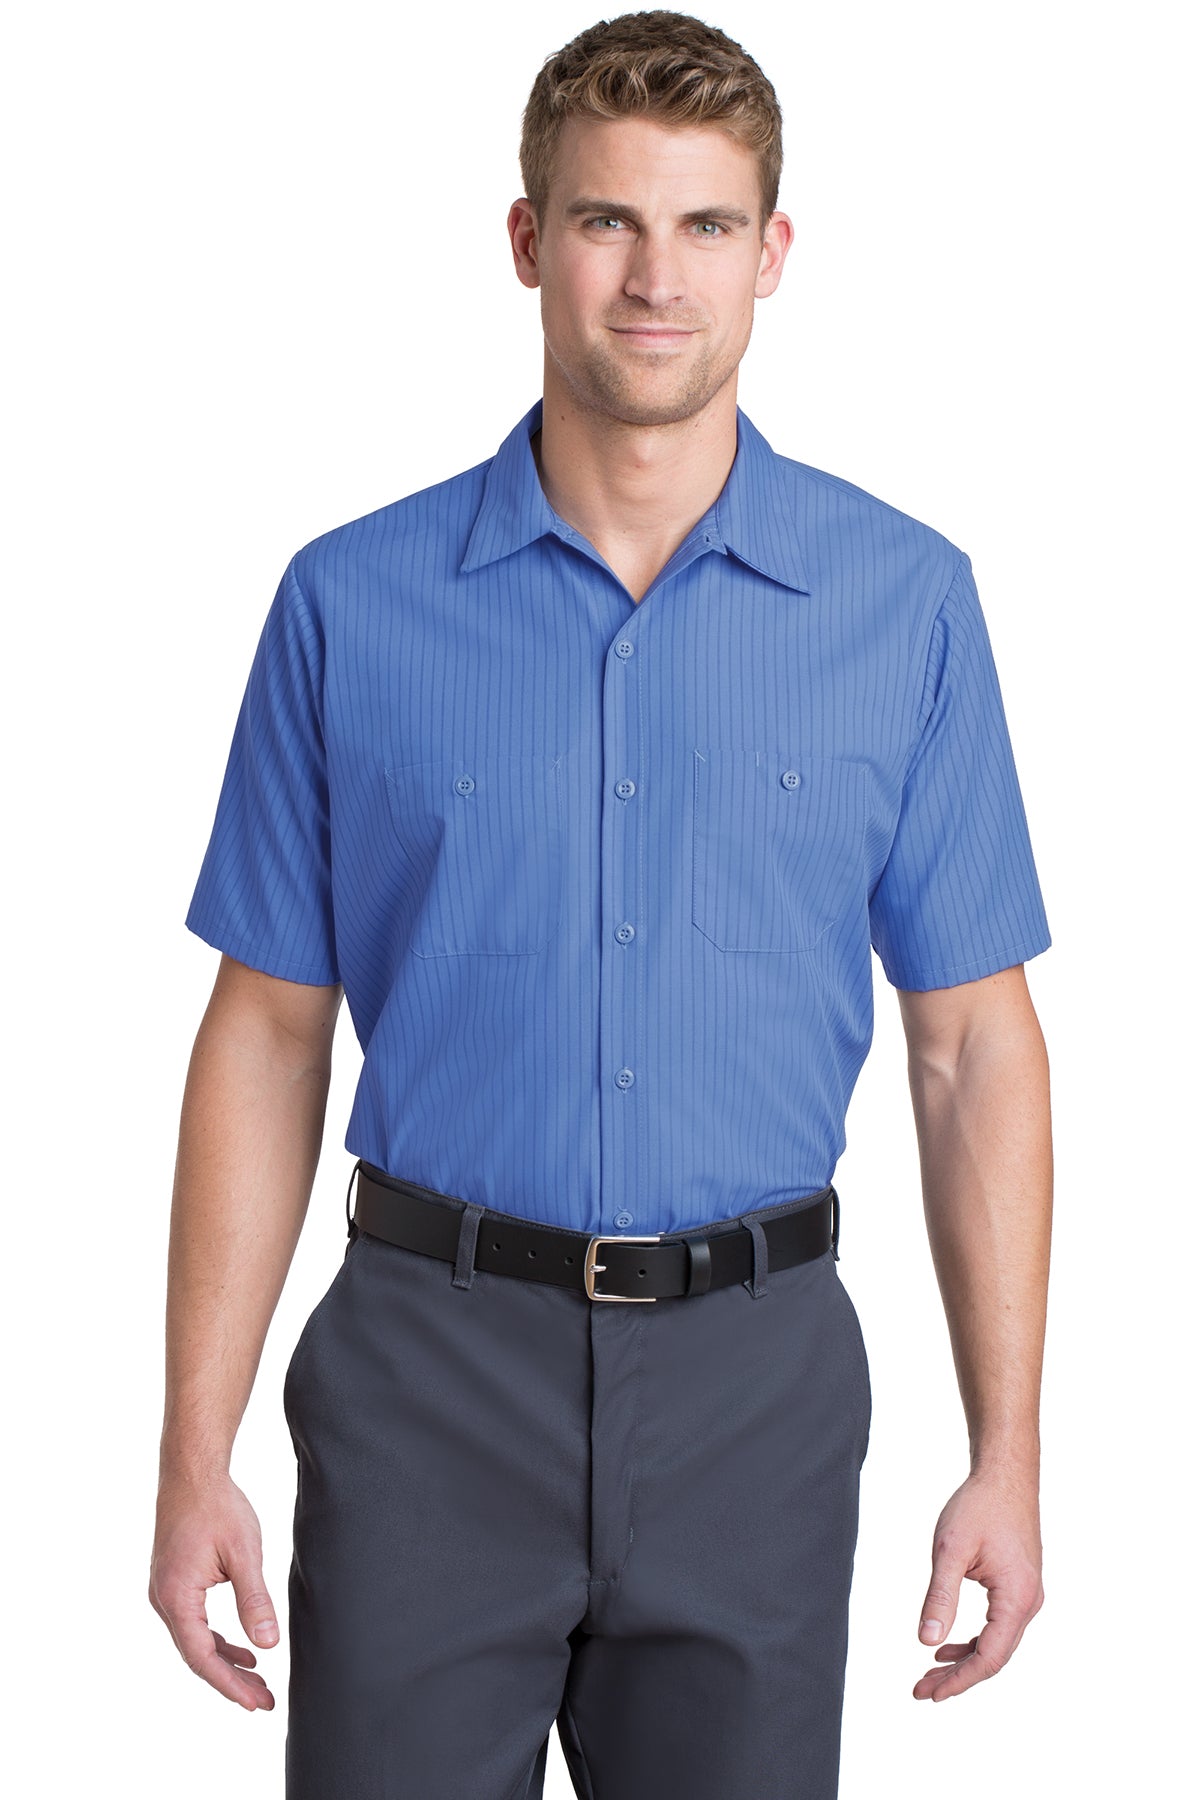 long size short sleeve striped industrial work shirt petrol blue navy